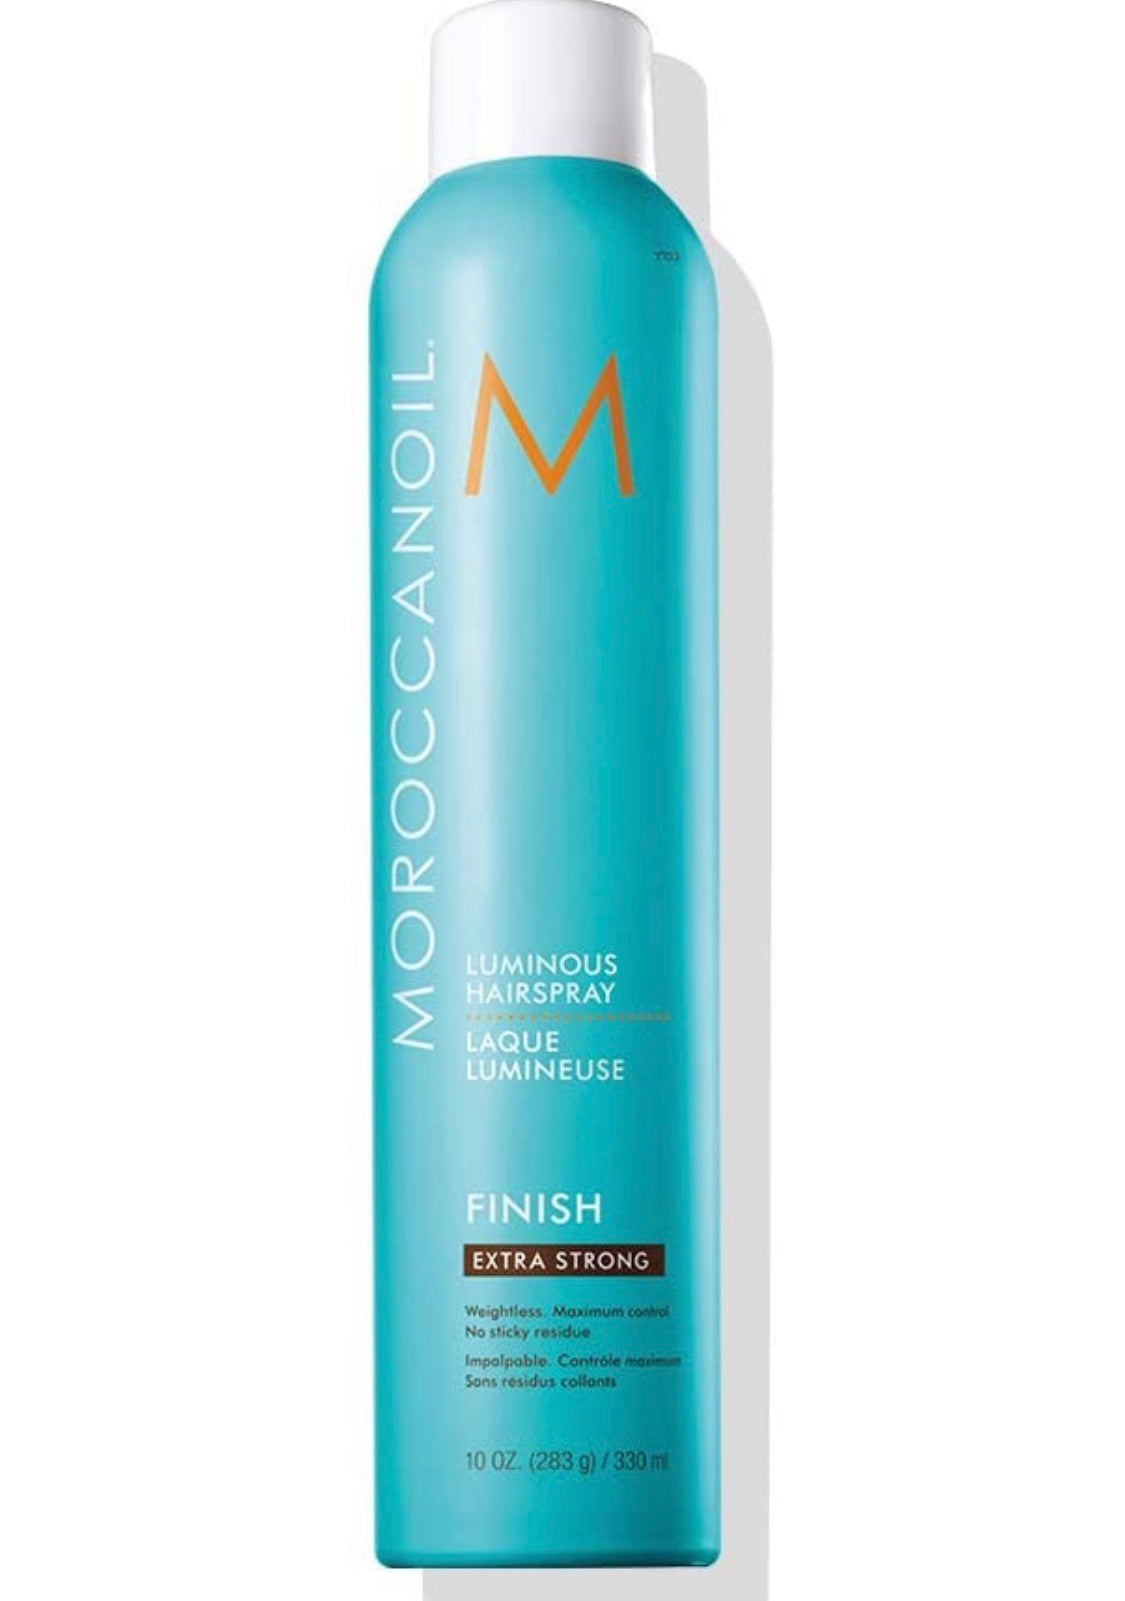 Moroccanoil - Luminous hairspray extra strong 10 fl. oz./ 330 ml